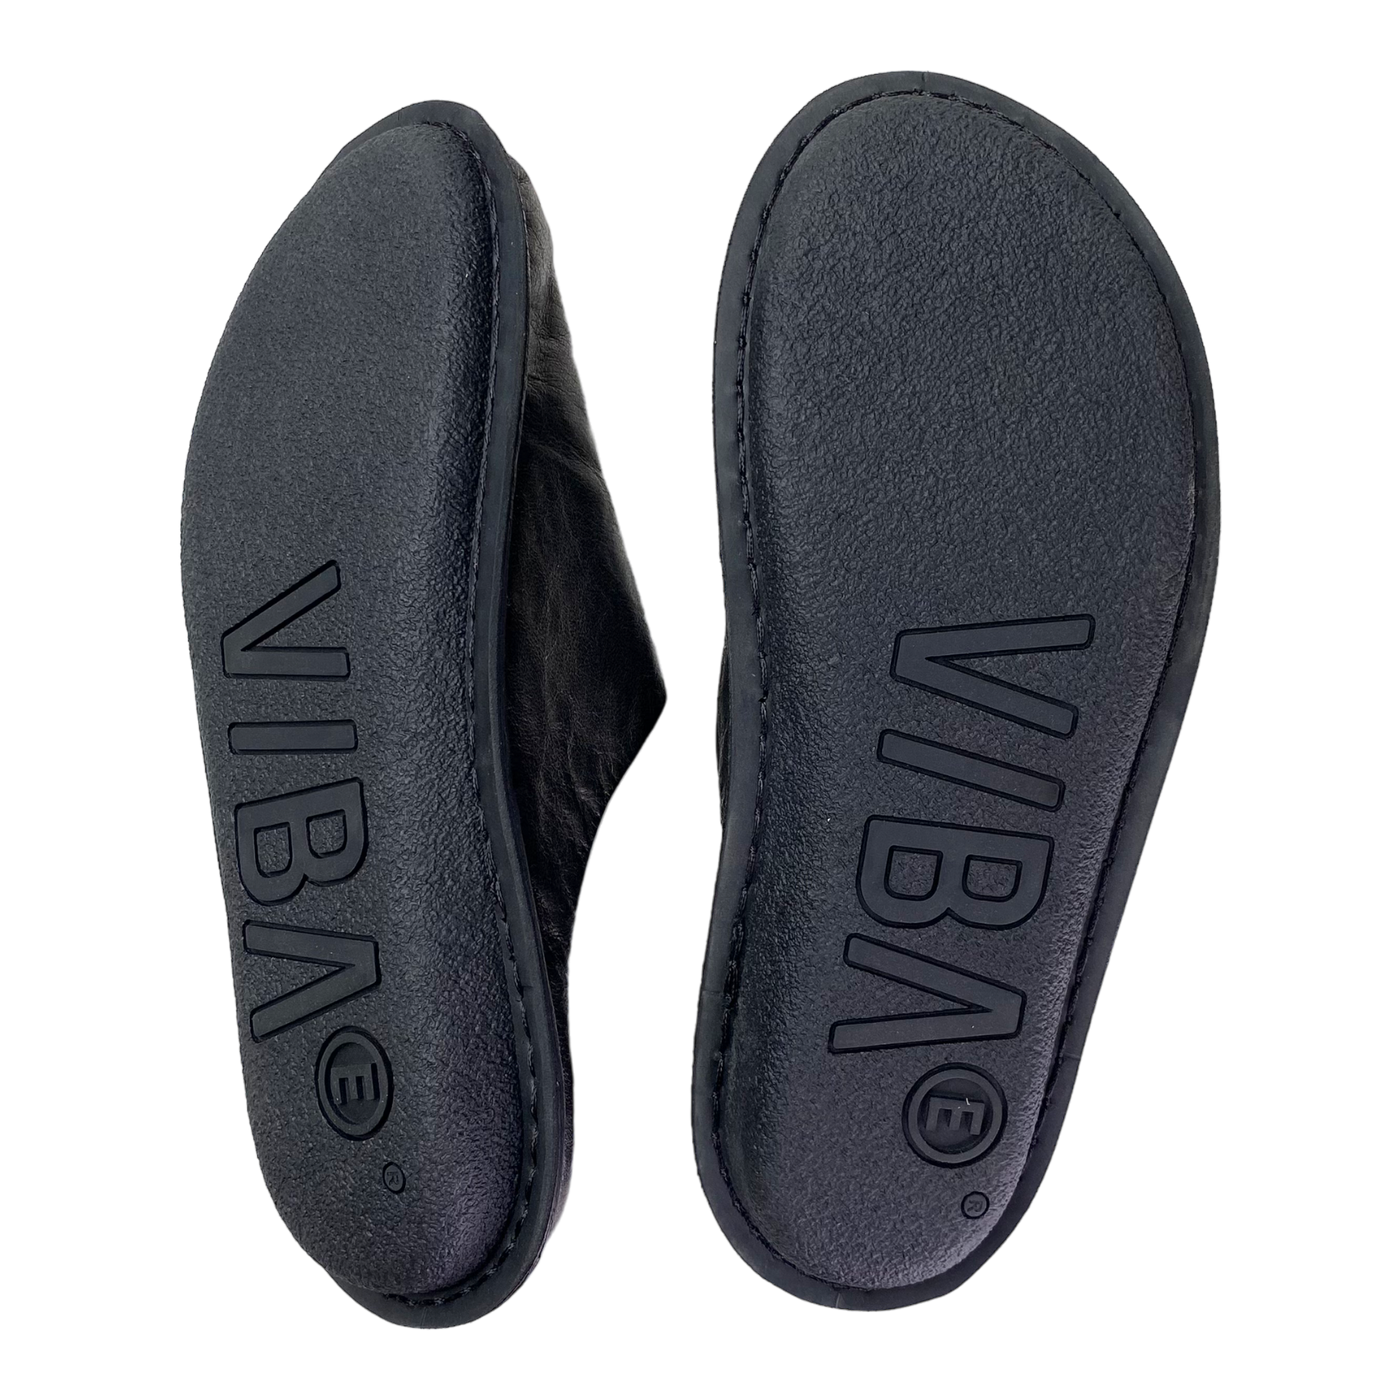 VIBAe Roma leather slippers, preto black | 42